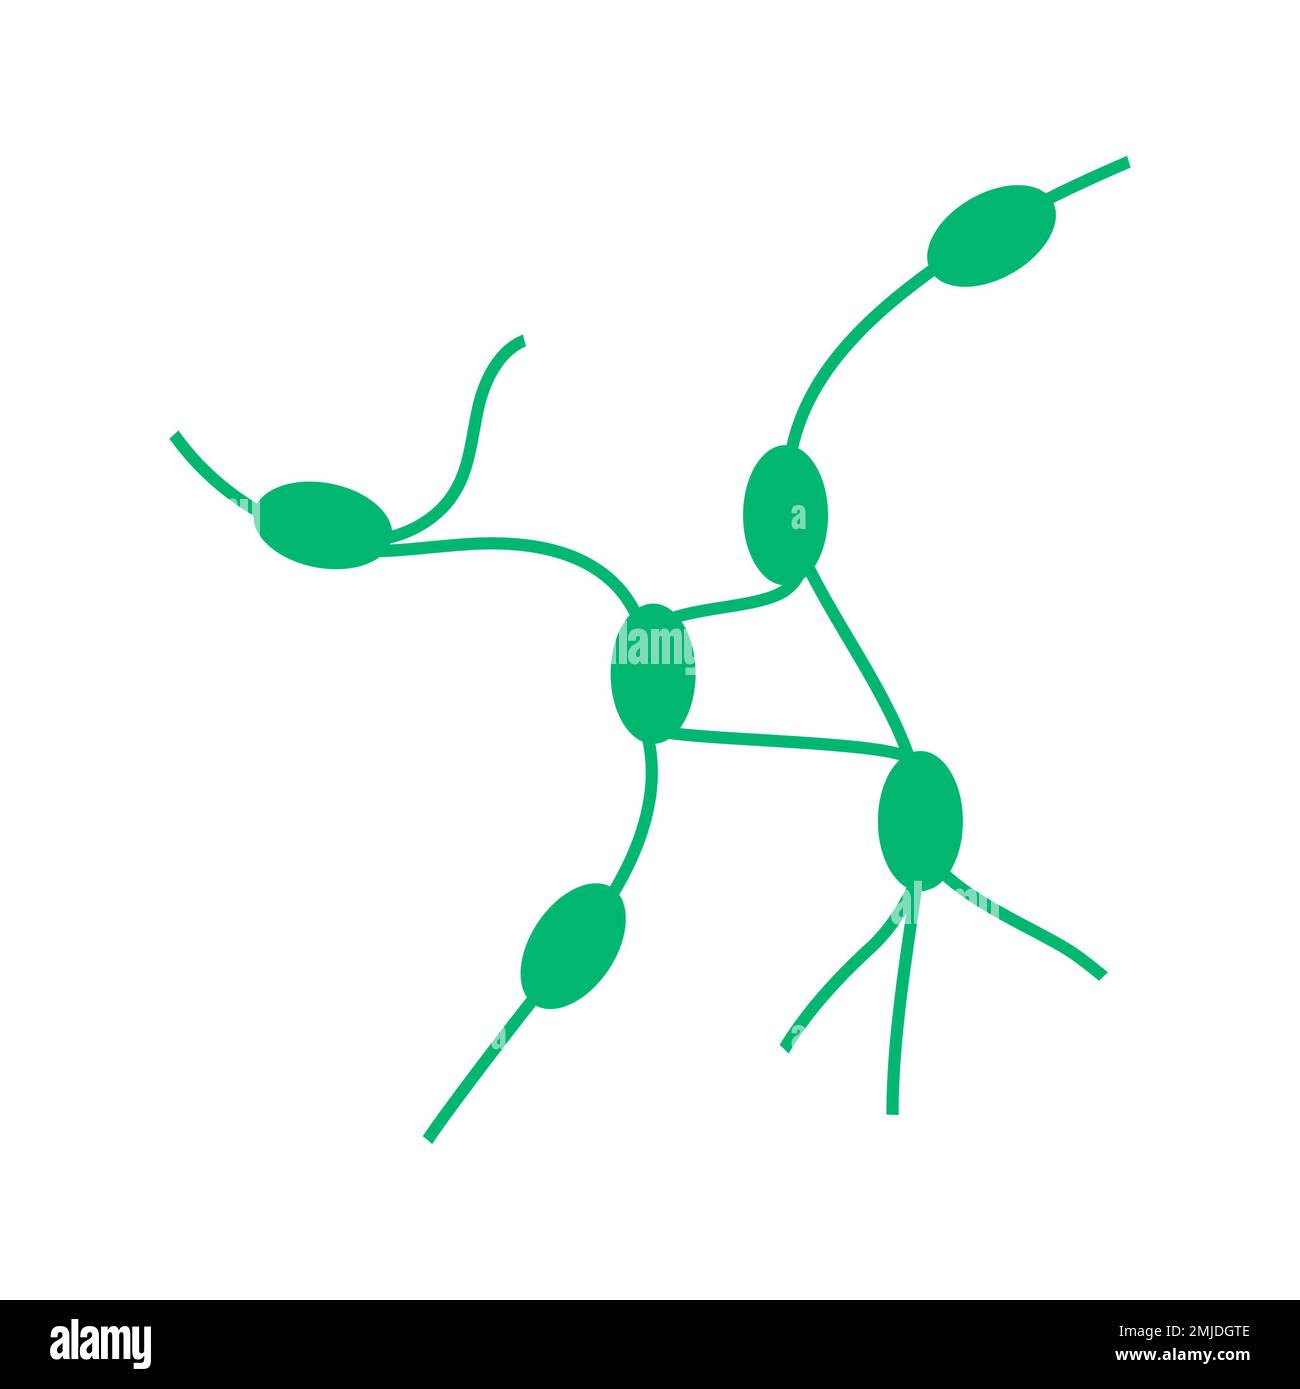 Lymph nodes, conceptual illustration Stock Photo